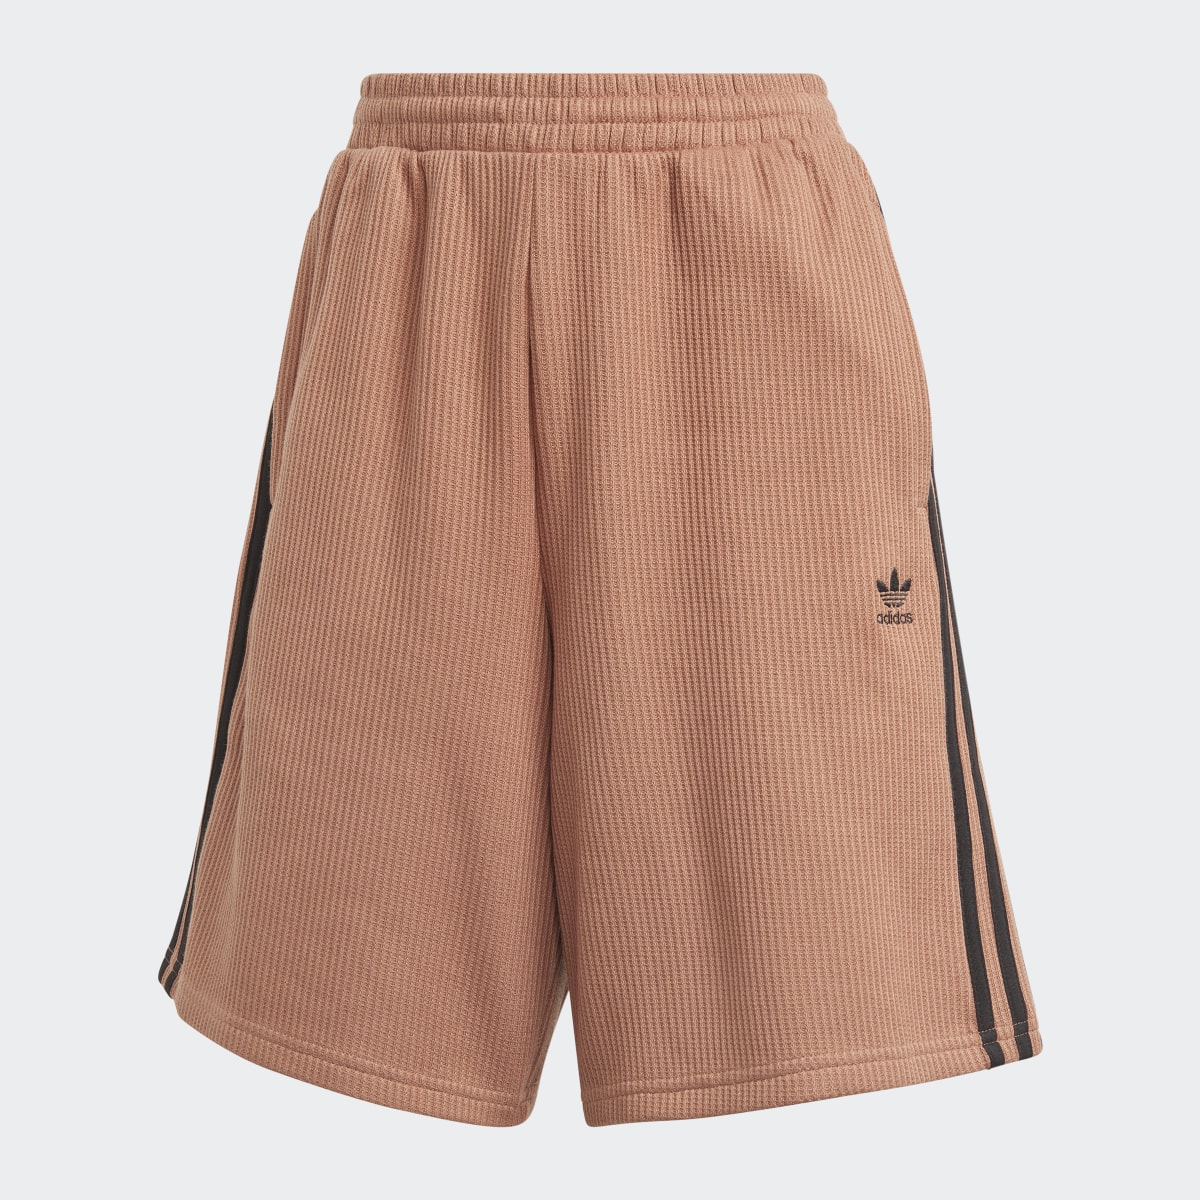 Adidas Bermuda Shorts. 4